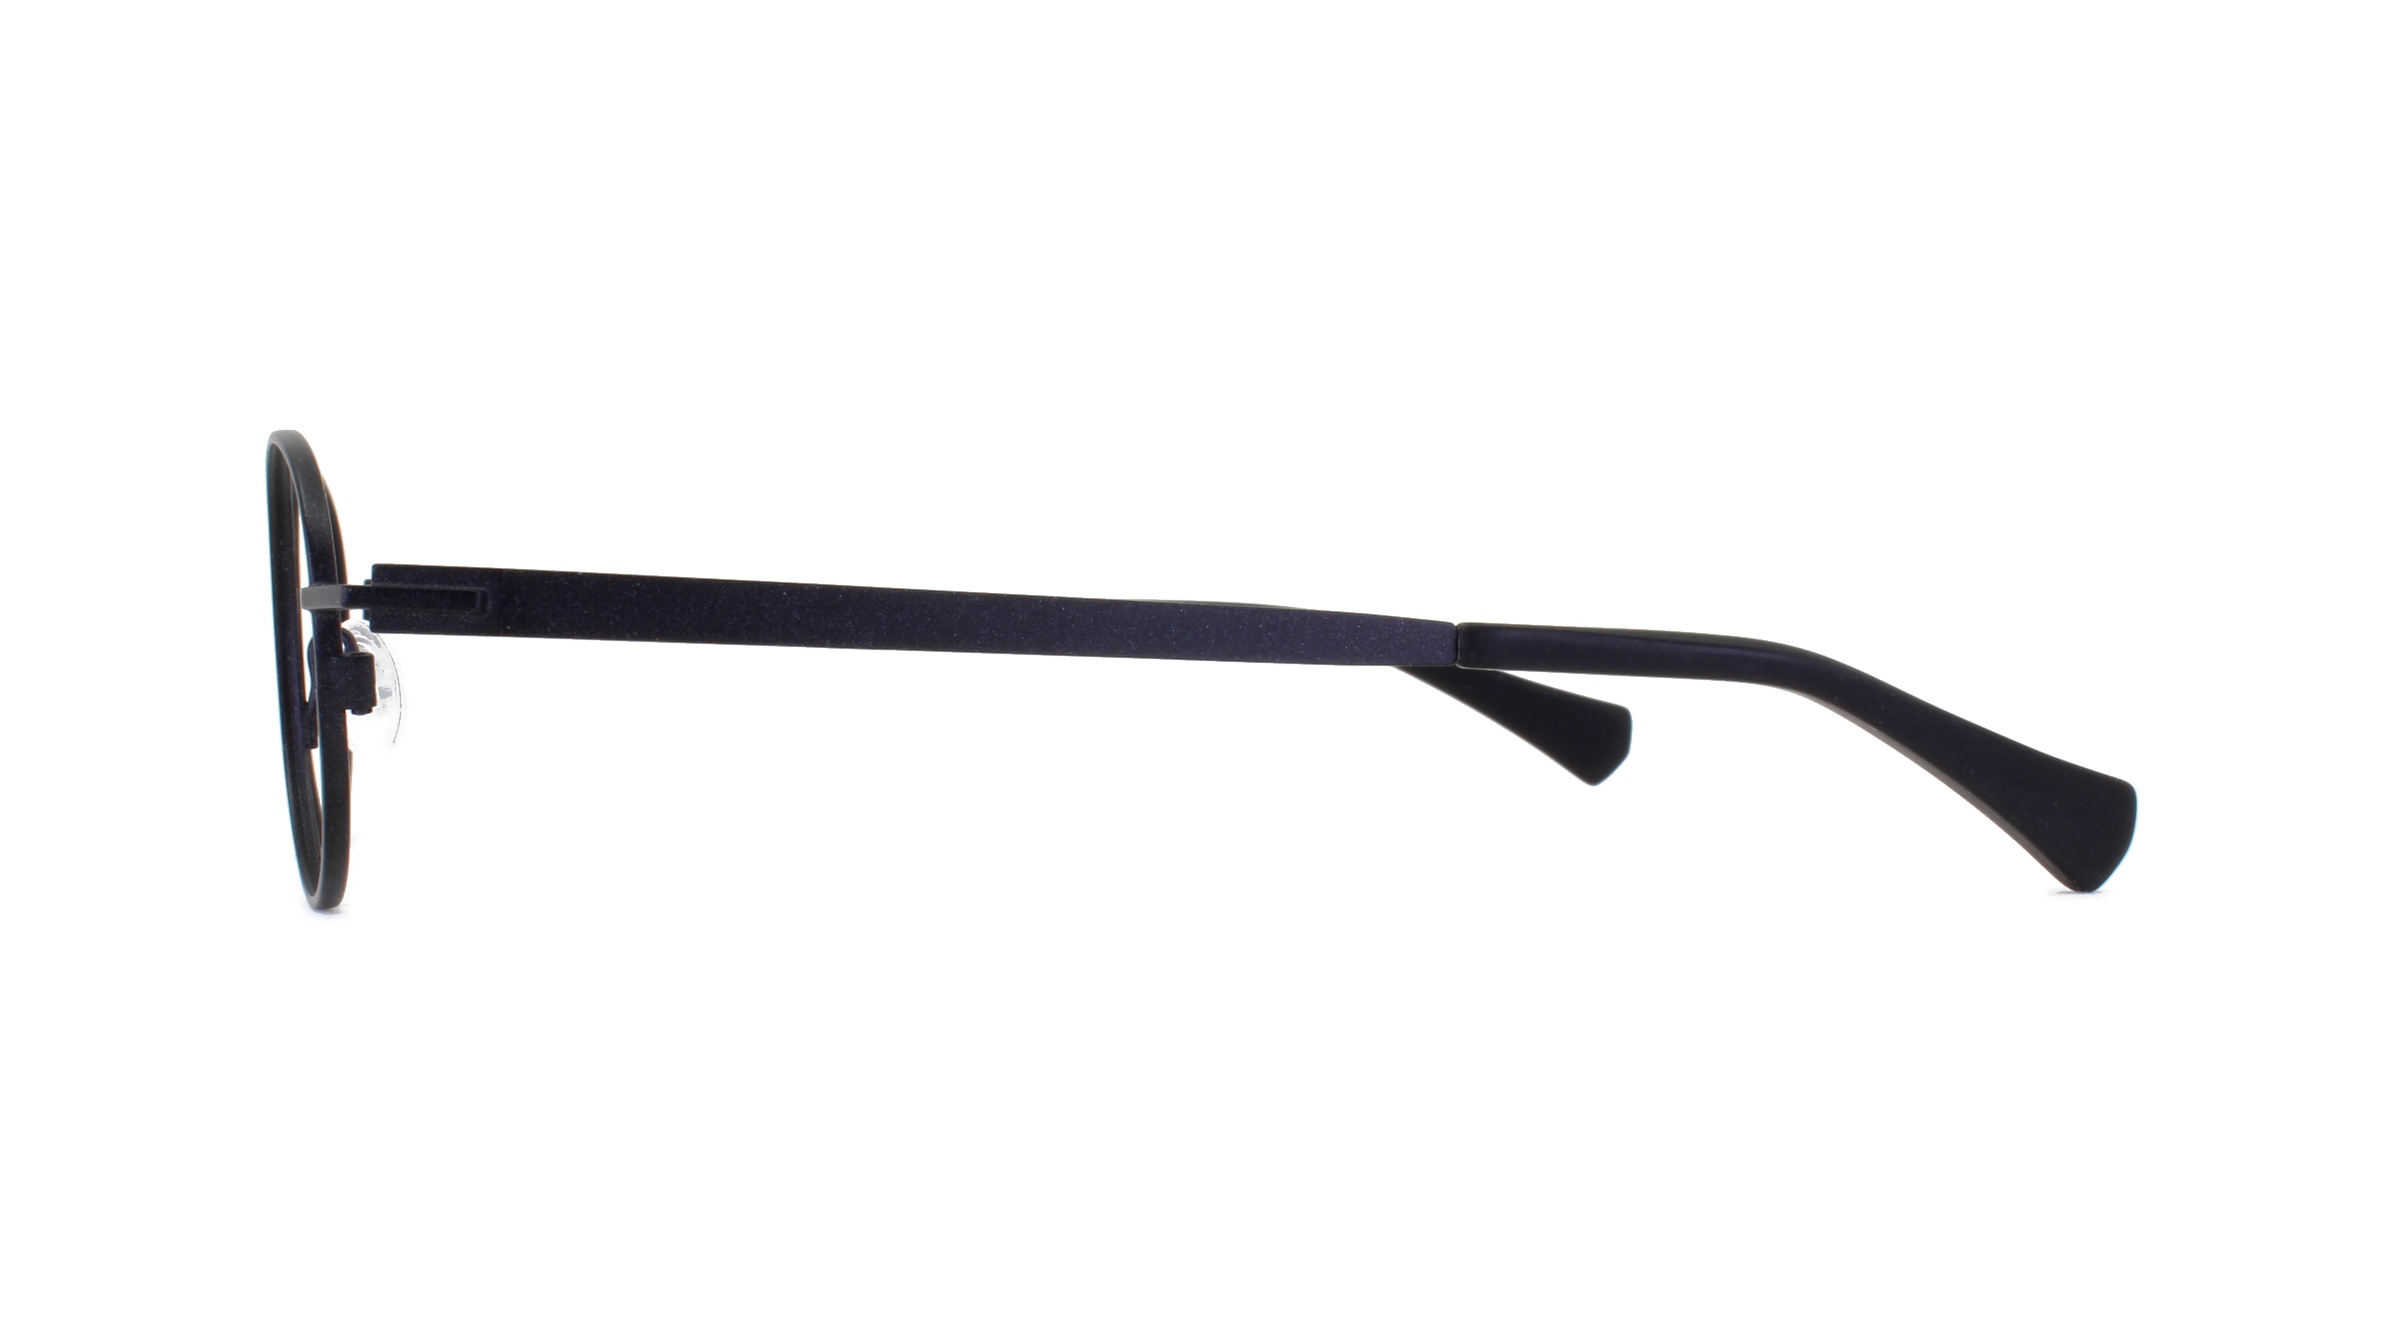 Glasses Matttew-eyewear Orchid, black colour - Doyle